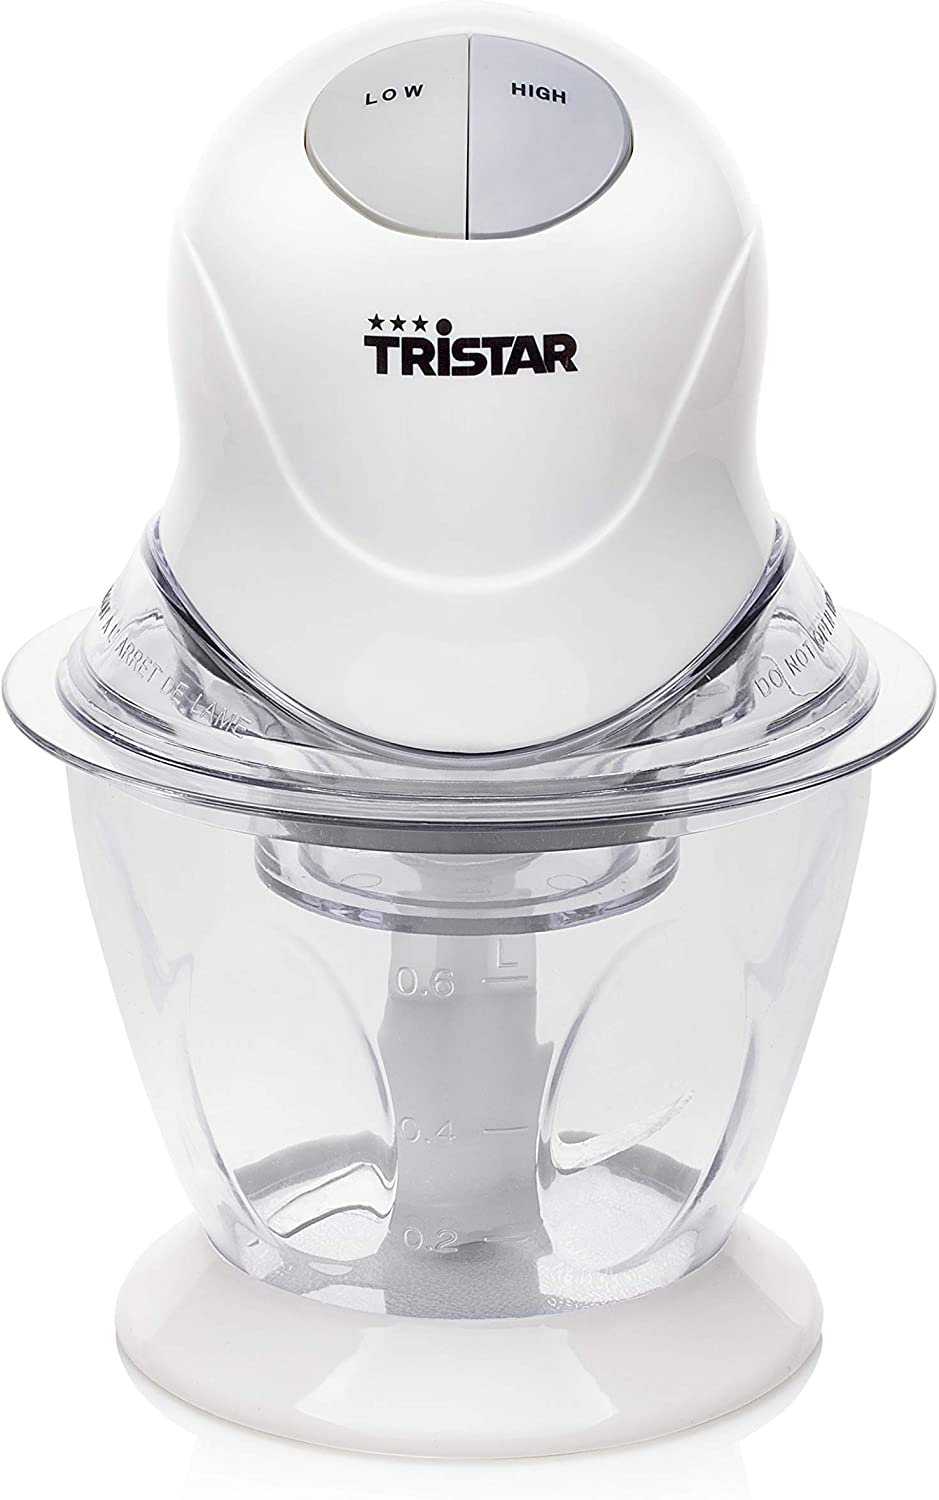 Tristar Chopper 0,6L plastic bowl - Stainless steel blades